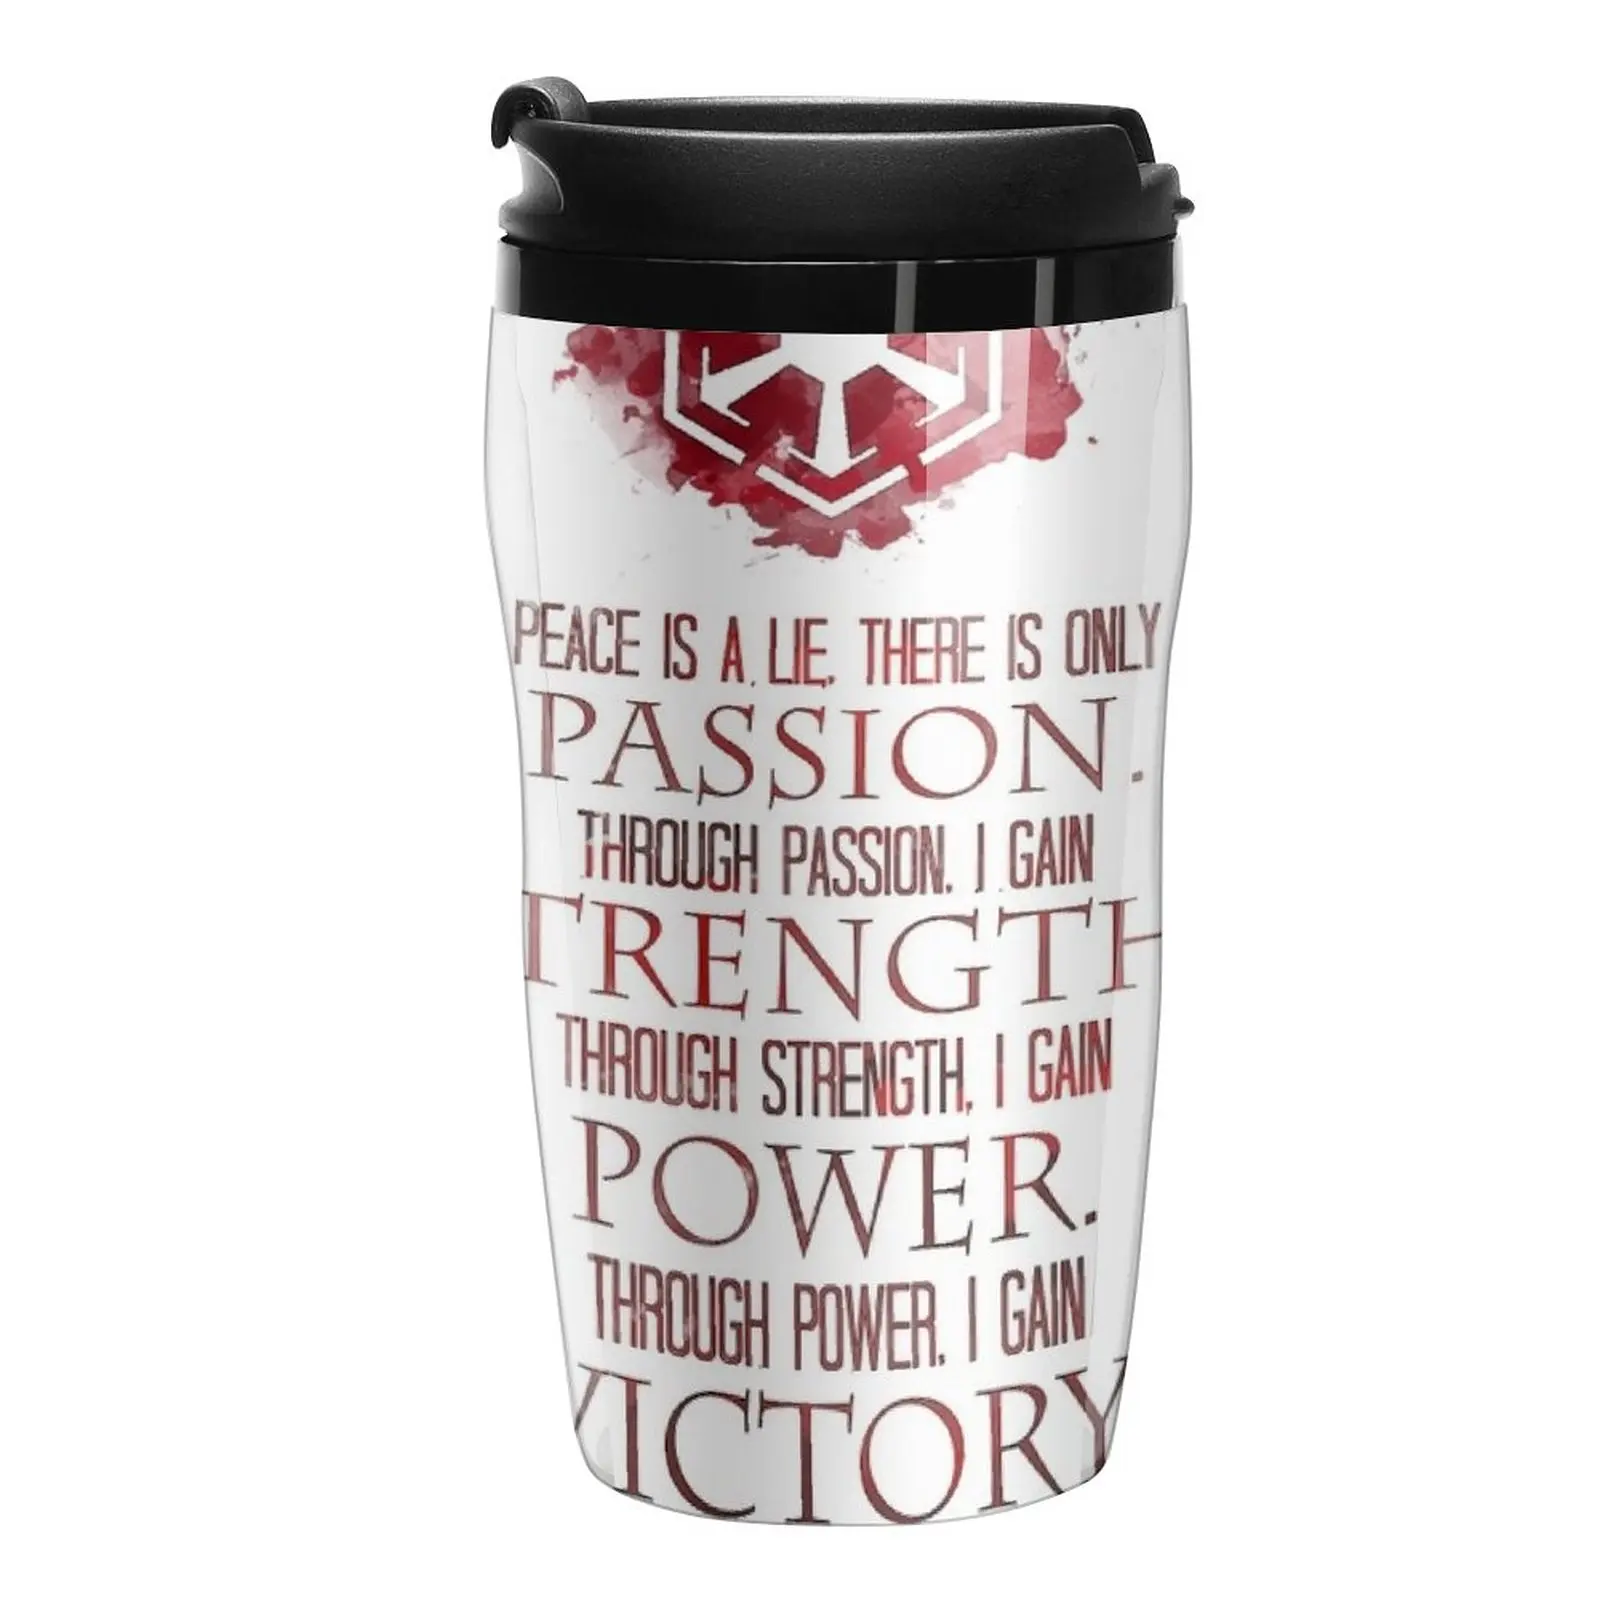 

New The Sith Code Travel Coffee Mug Thermos Mug Insulated Cup For Coffee